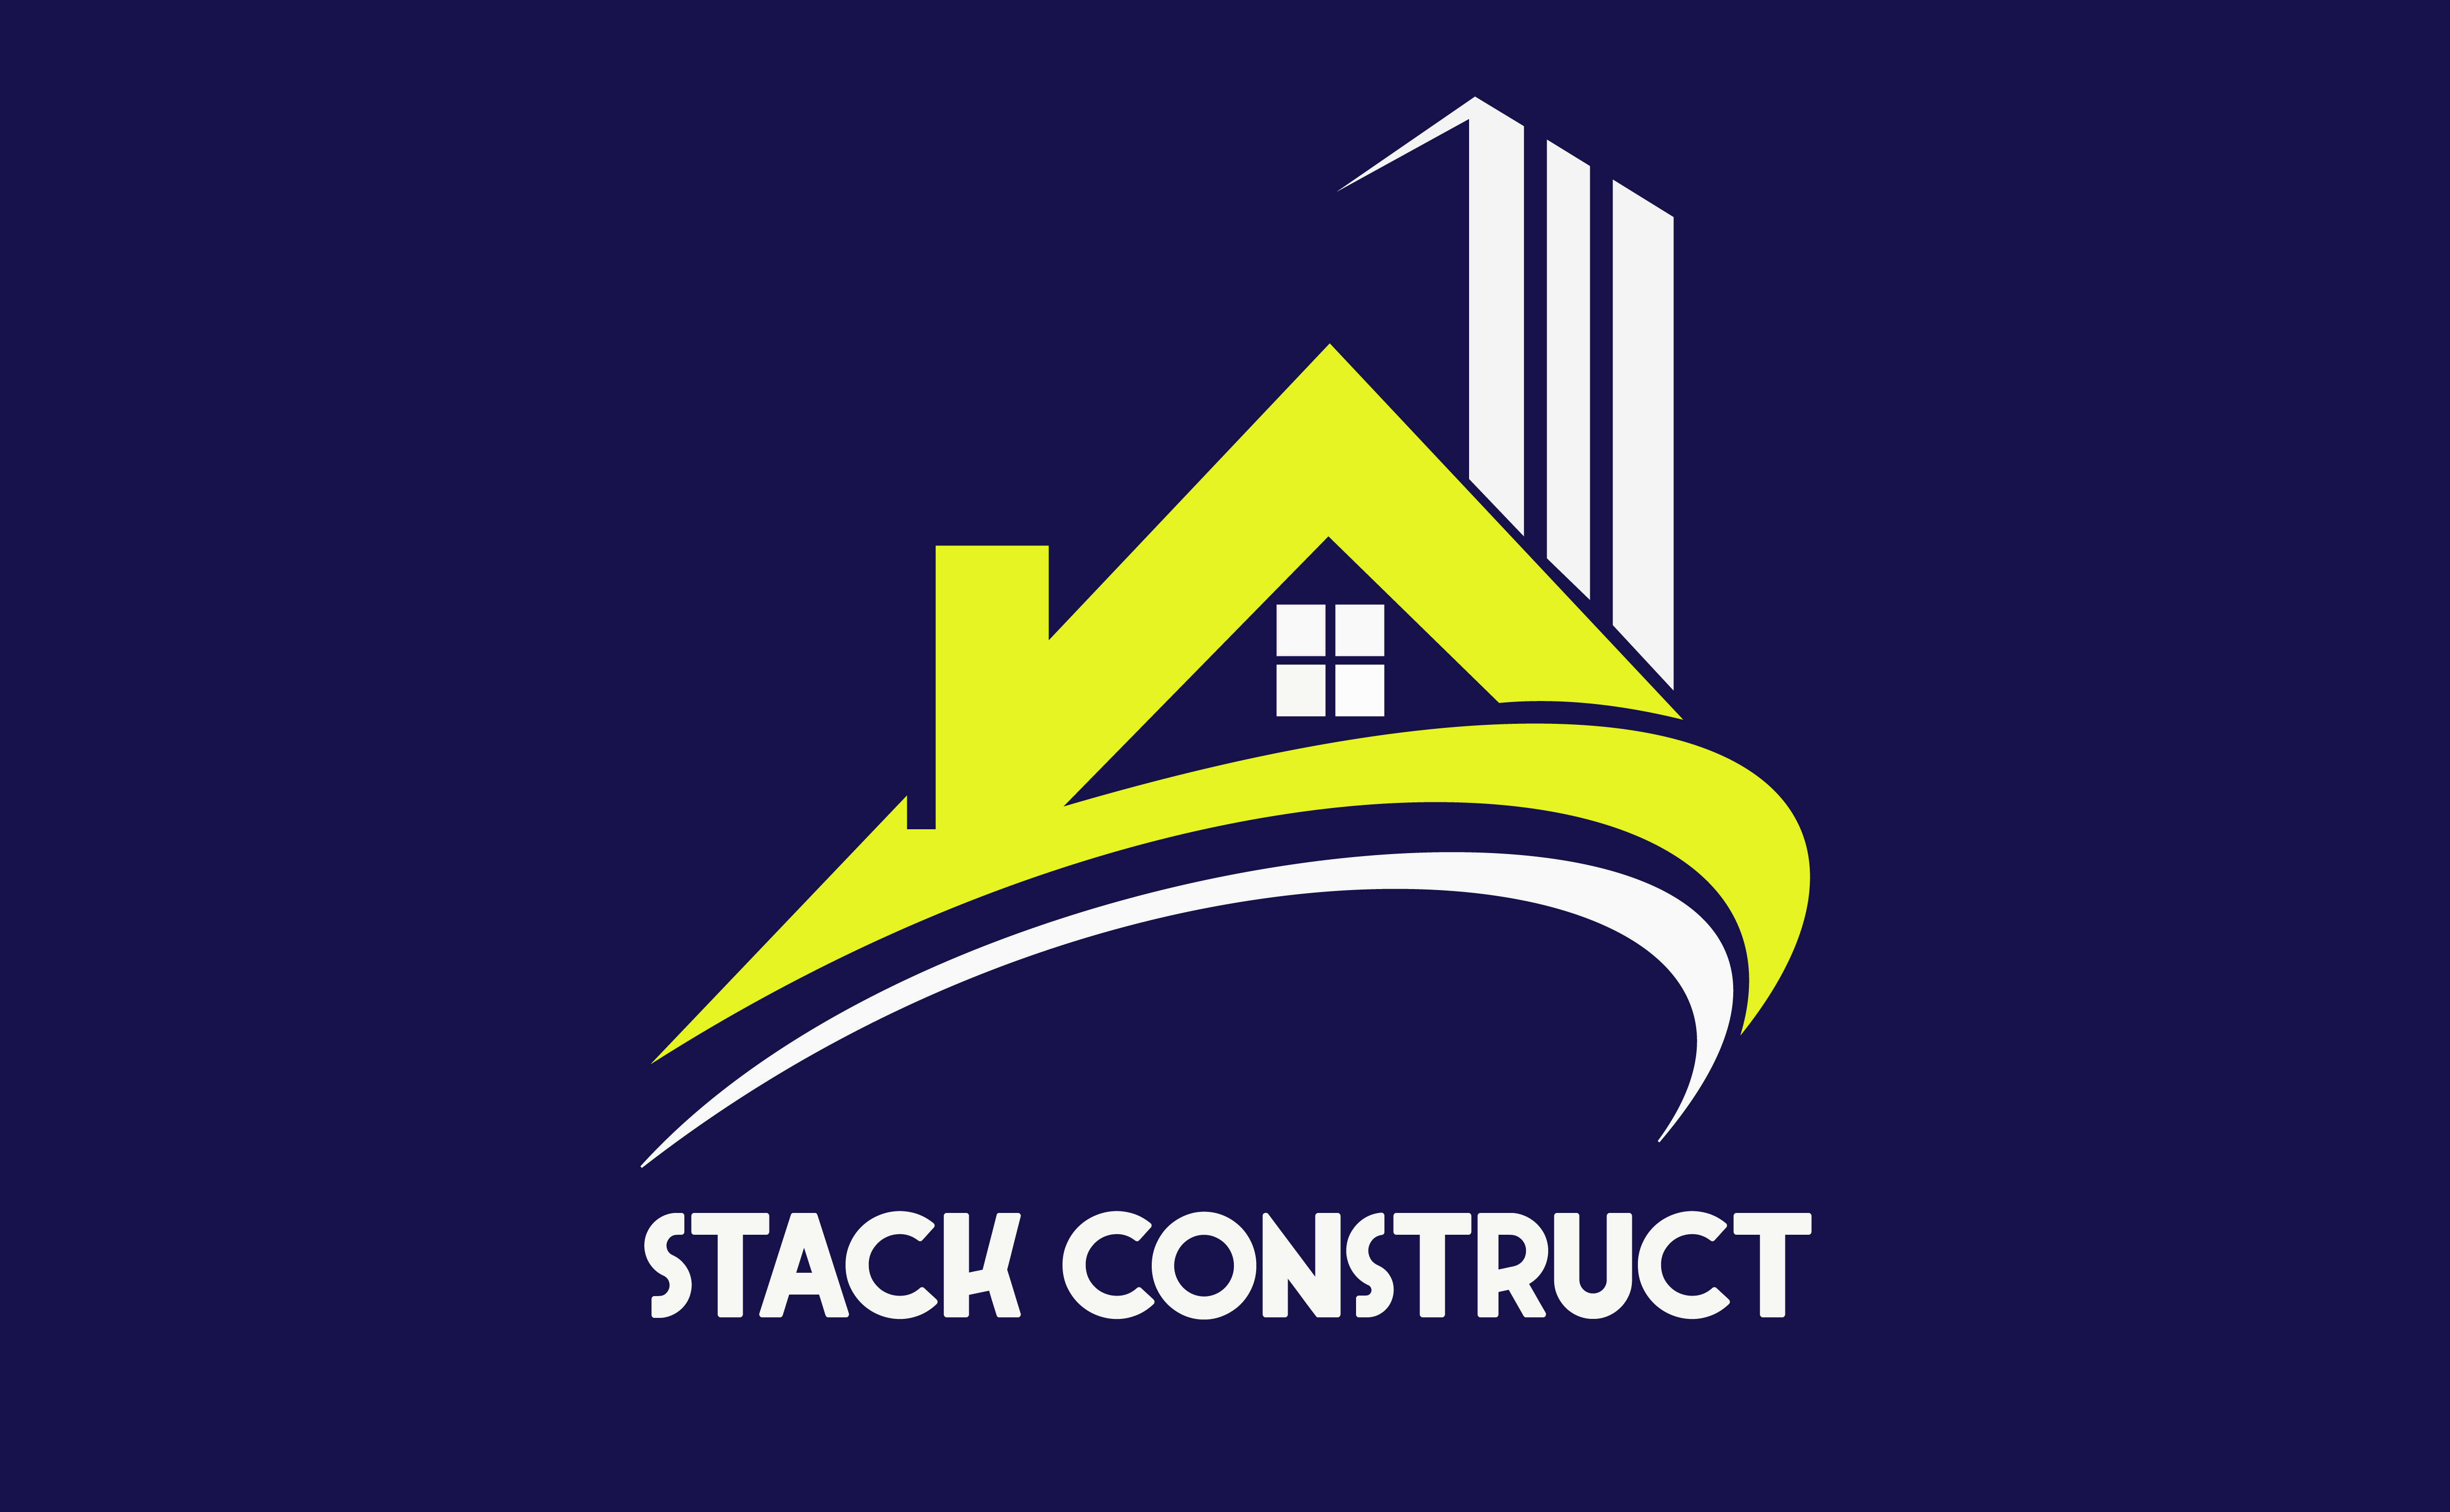 Construction Logo Design Tutorial in Photoshop - YouTube